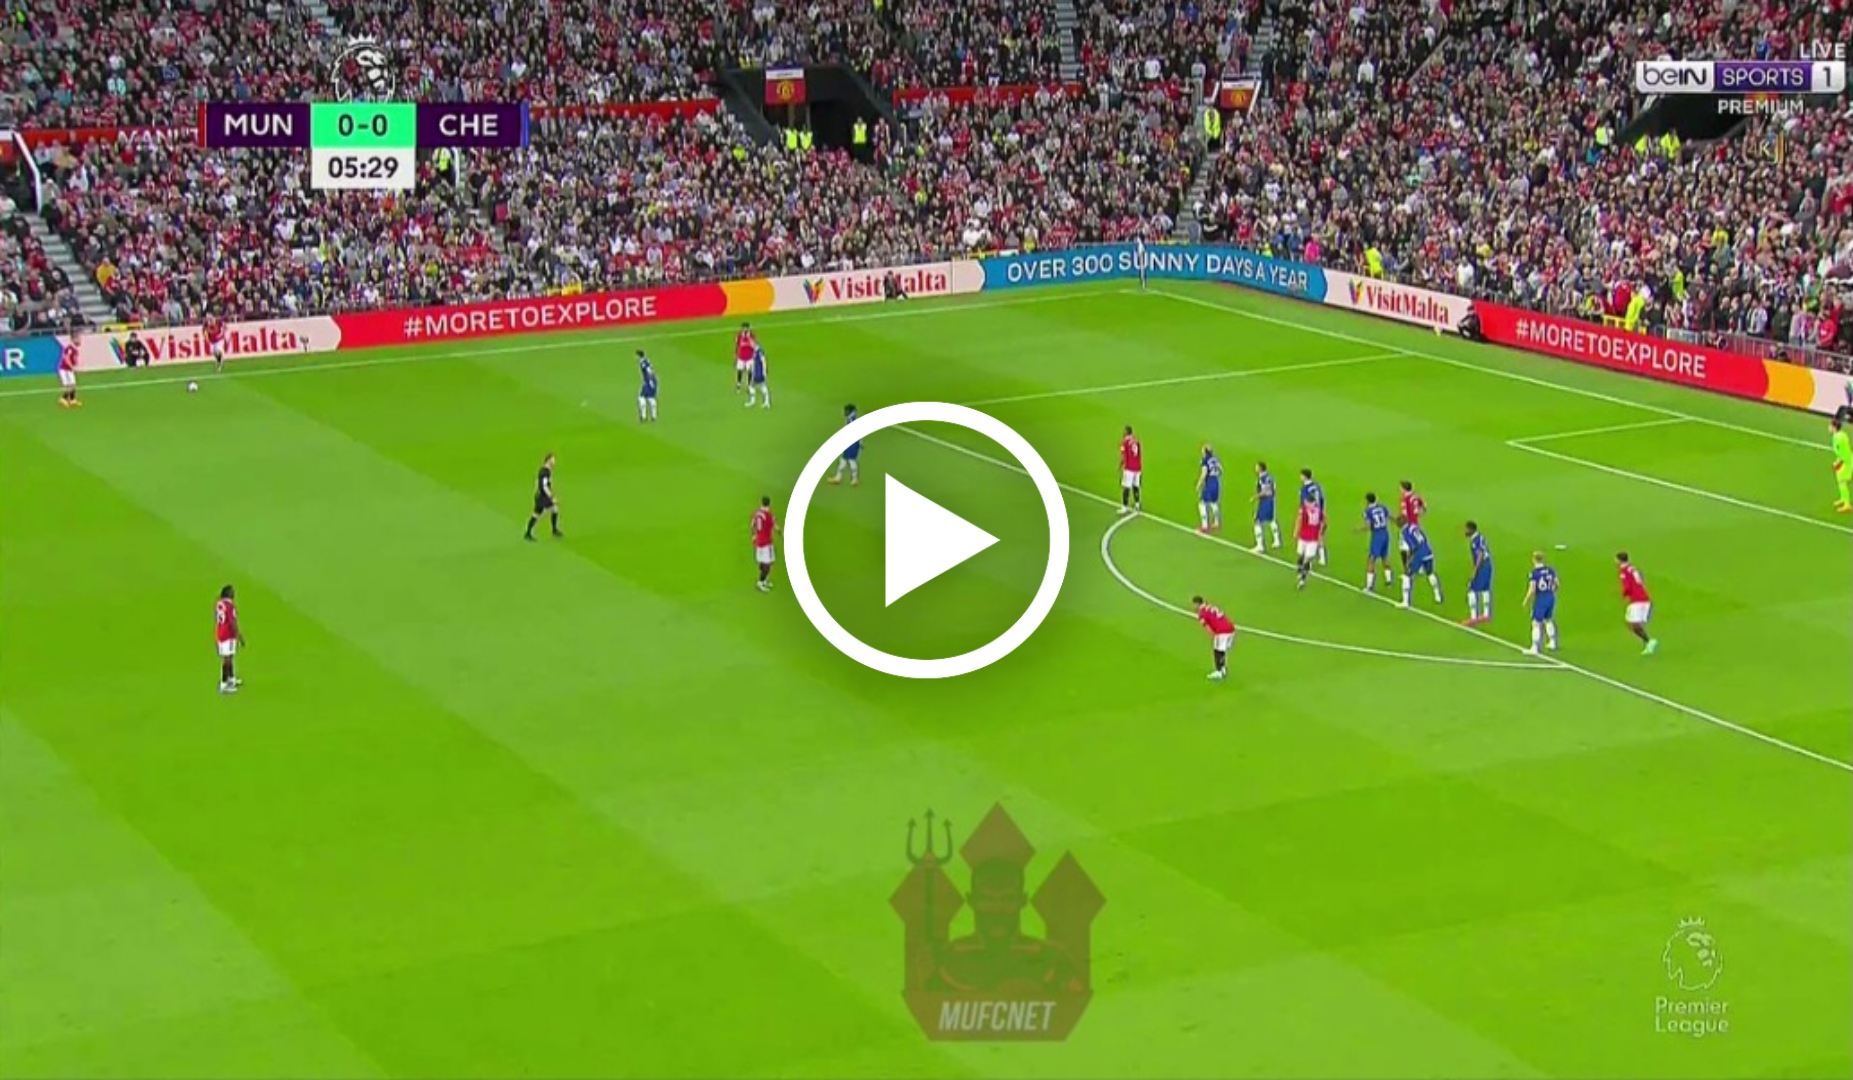 (Video): Watch: GOAL! Man United 1-0 Chelsea Casemiro ruthless header 1 Sportelo